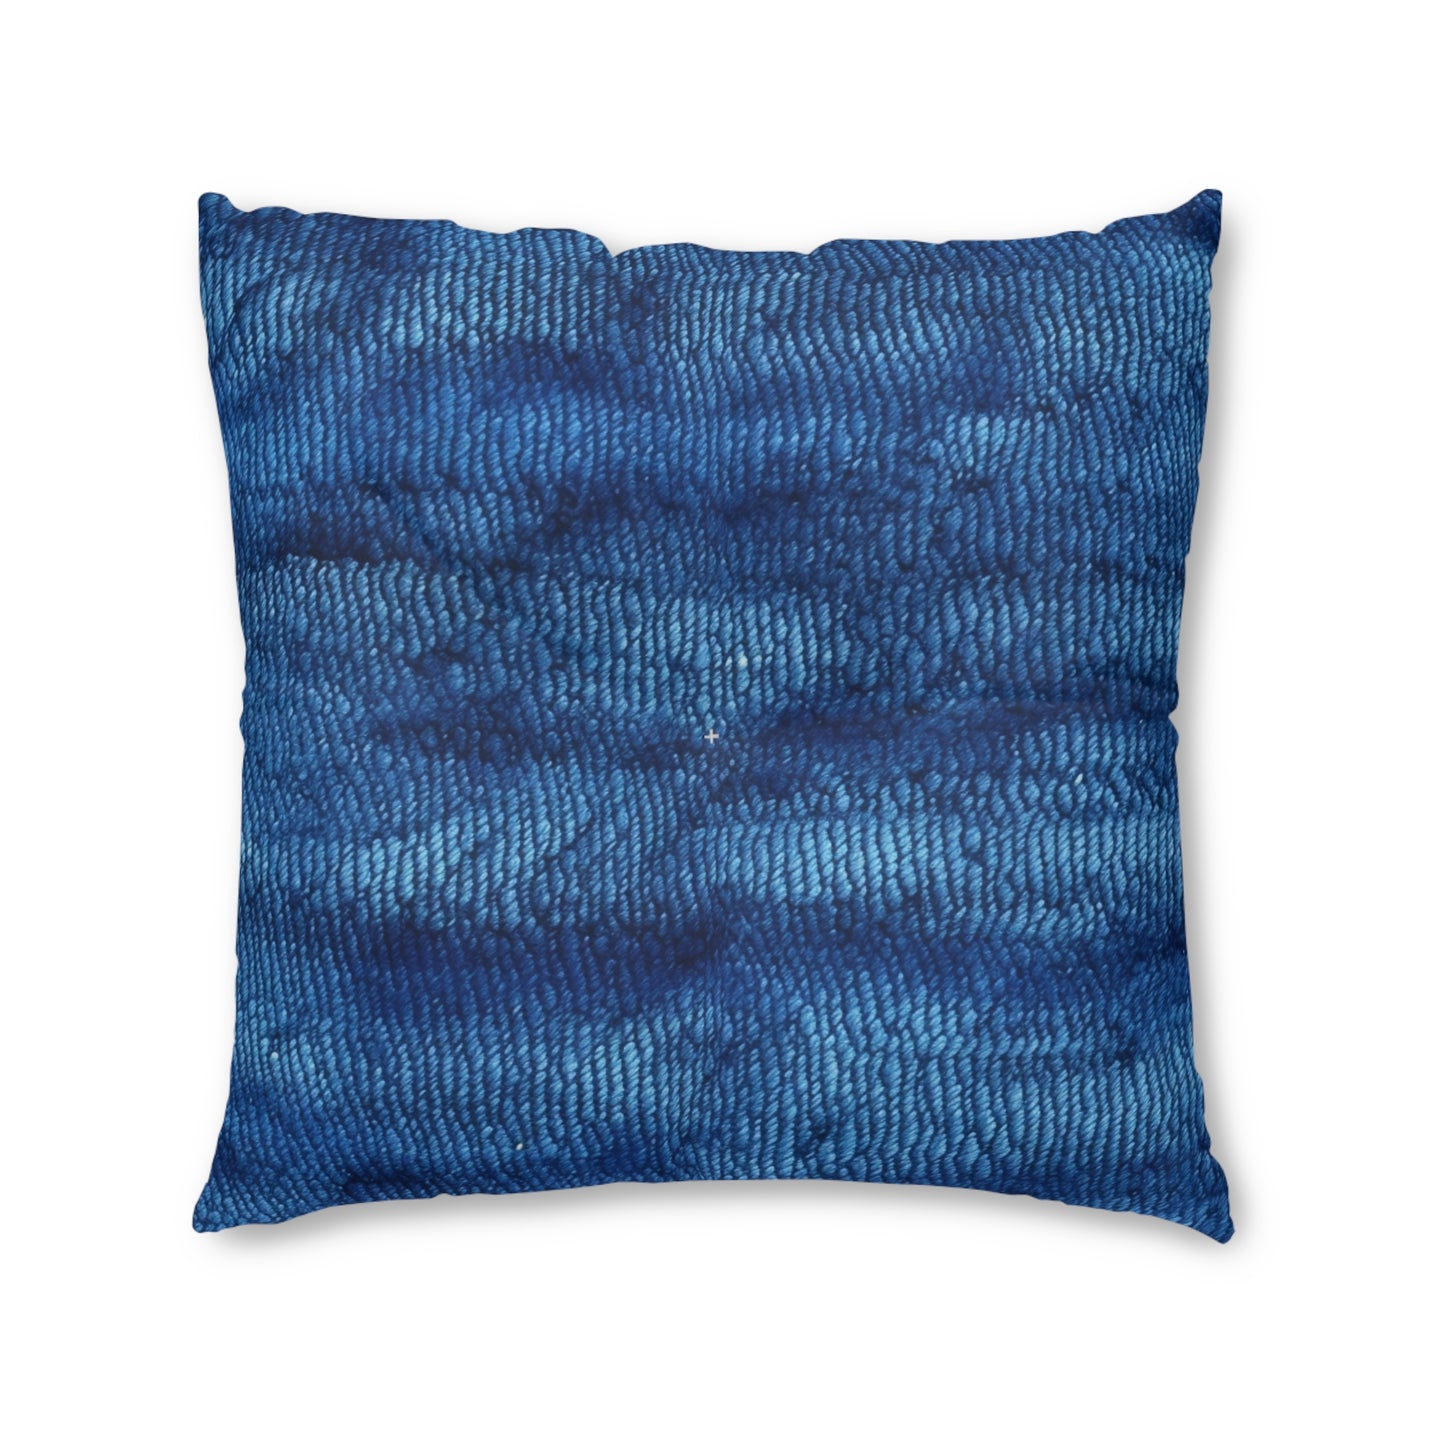 Blue Spectrum: Denim-Inspired Fabric Light to Dark - Tufted Floor Pillow, Square